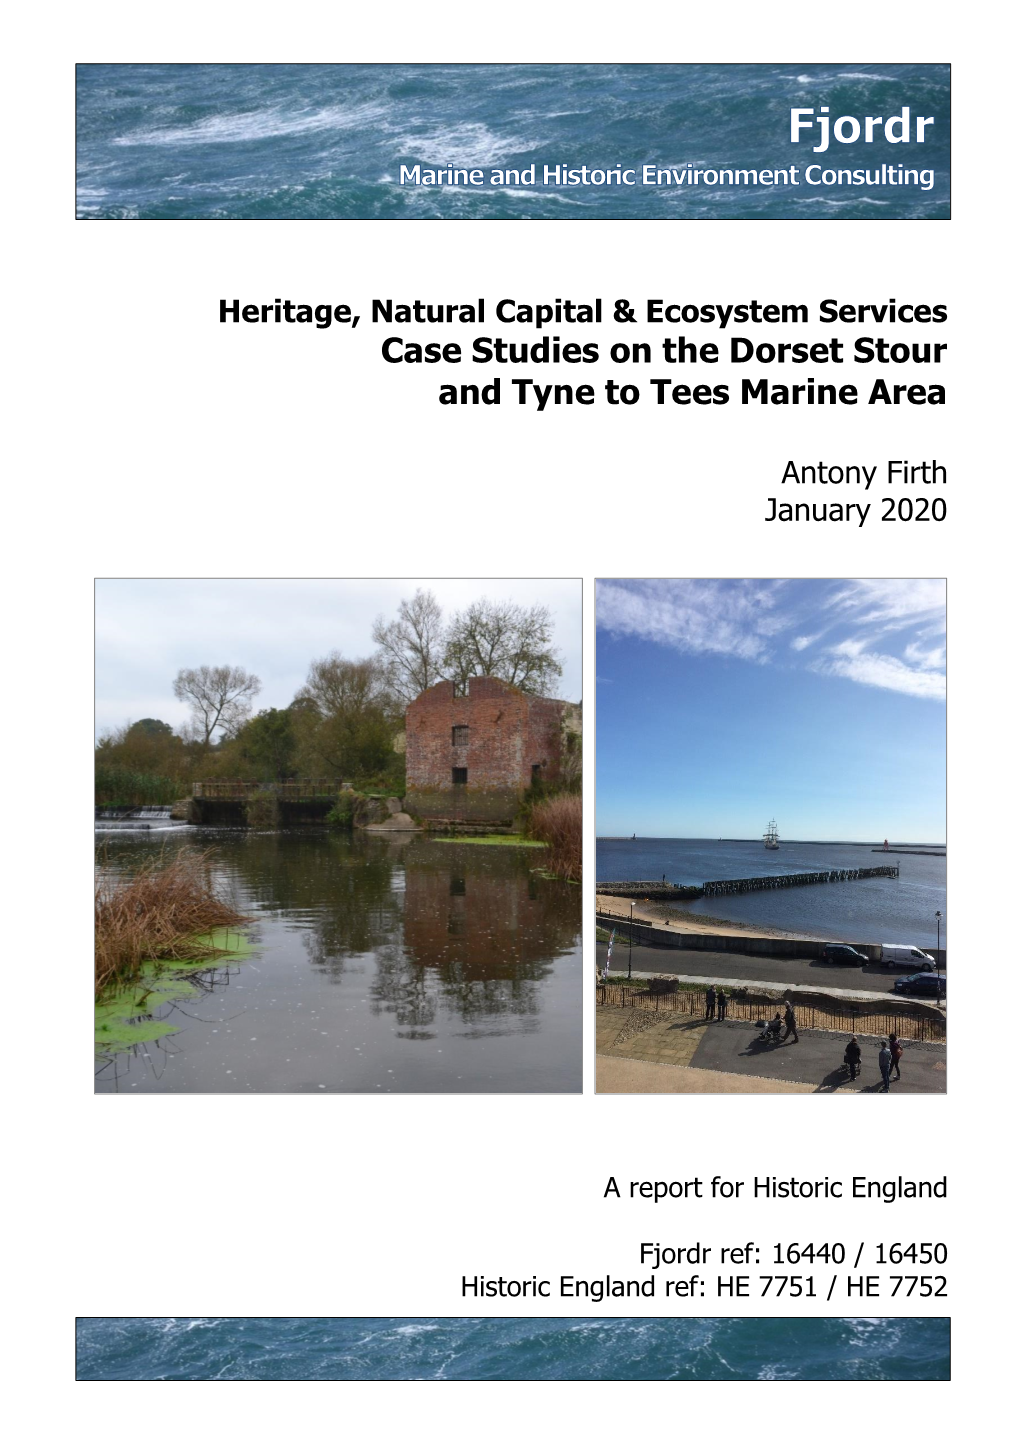 Case Studies on the Dorset Stour and Tyne to Tees Marine Area